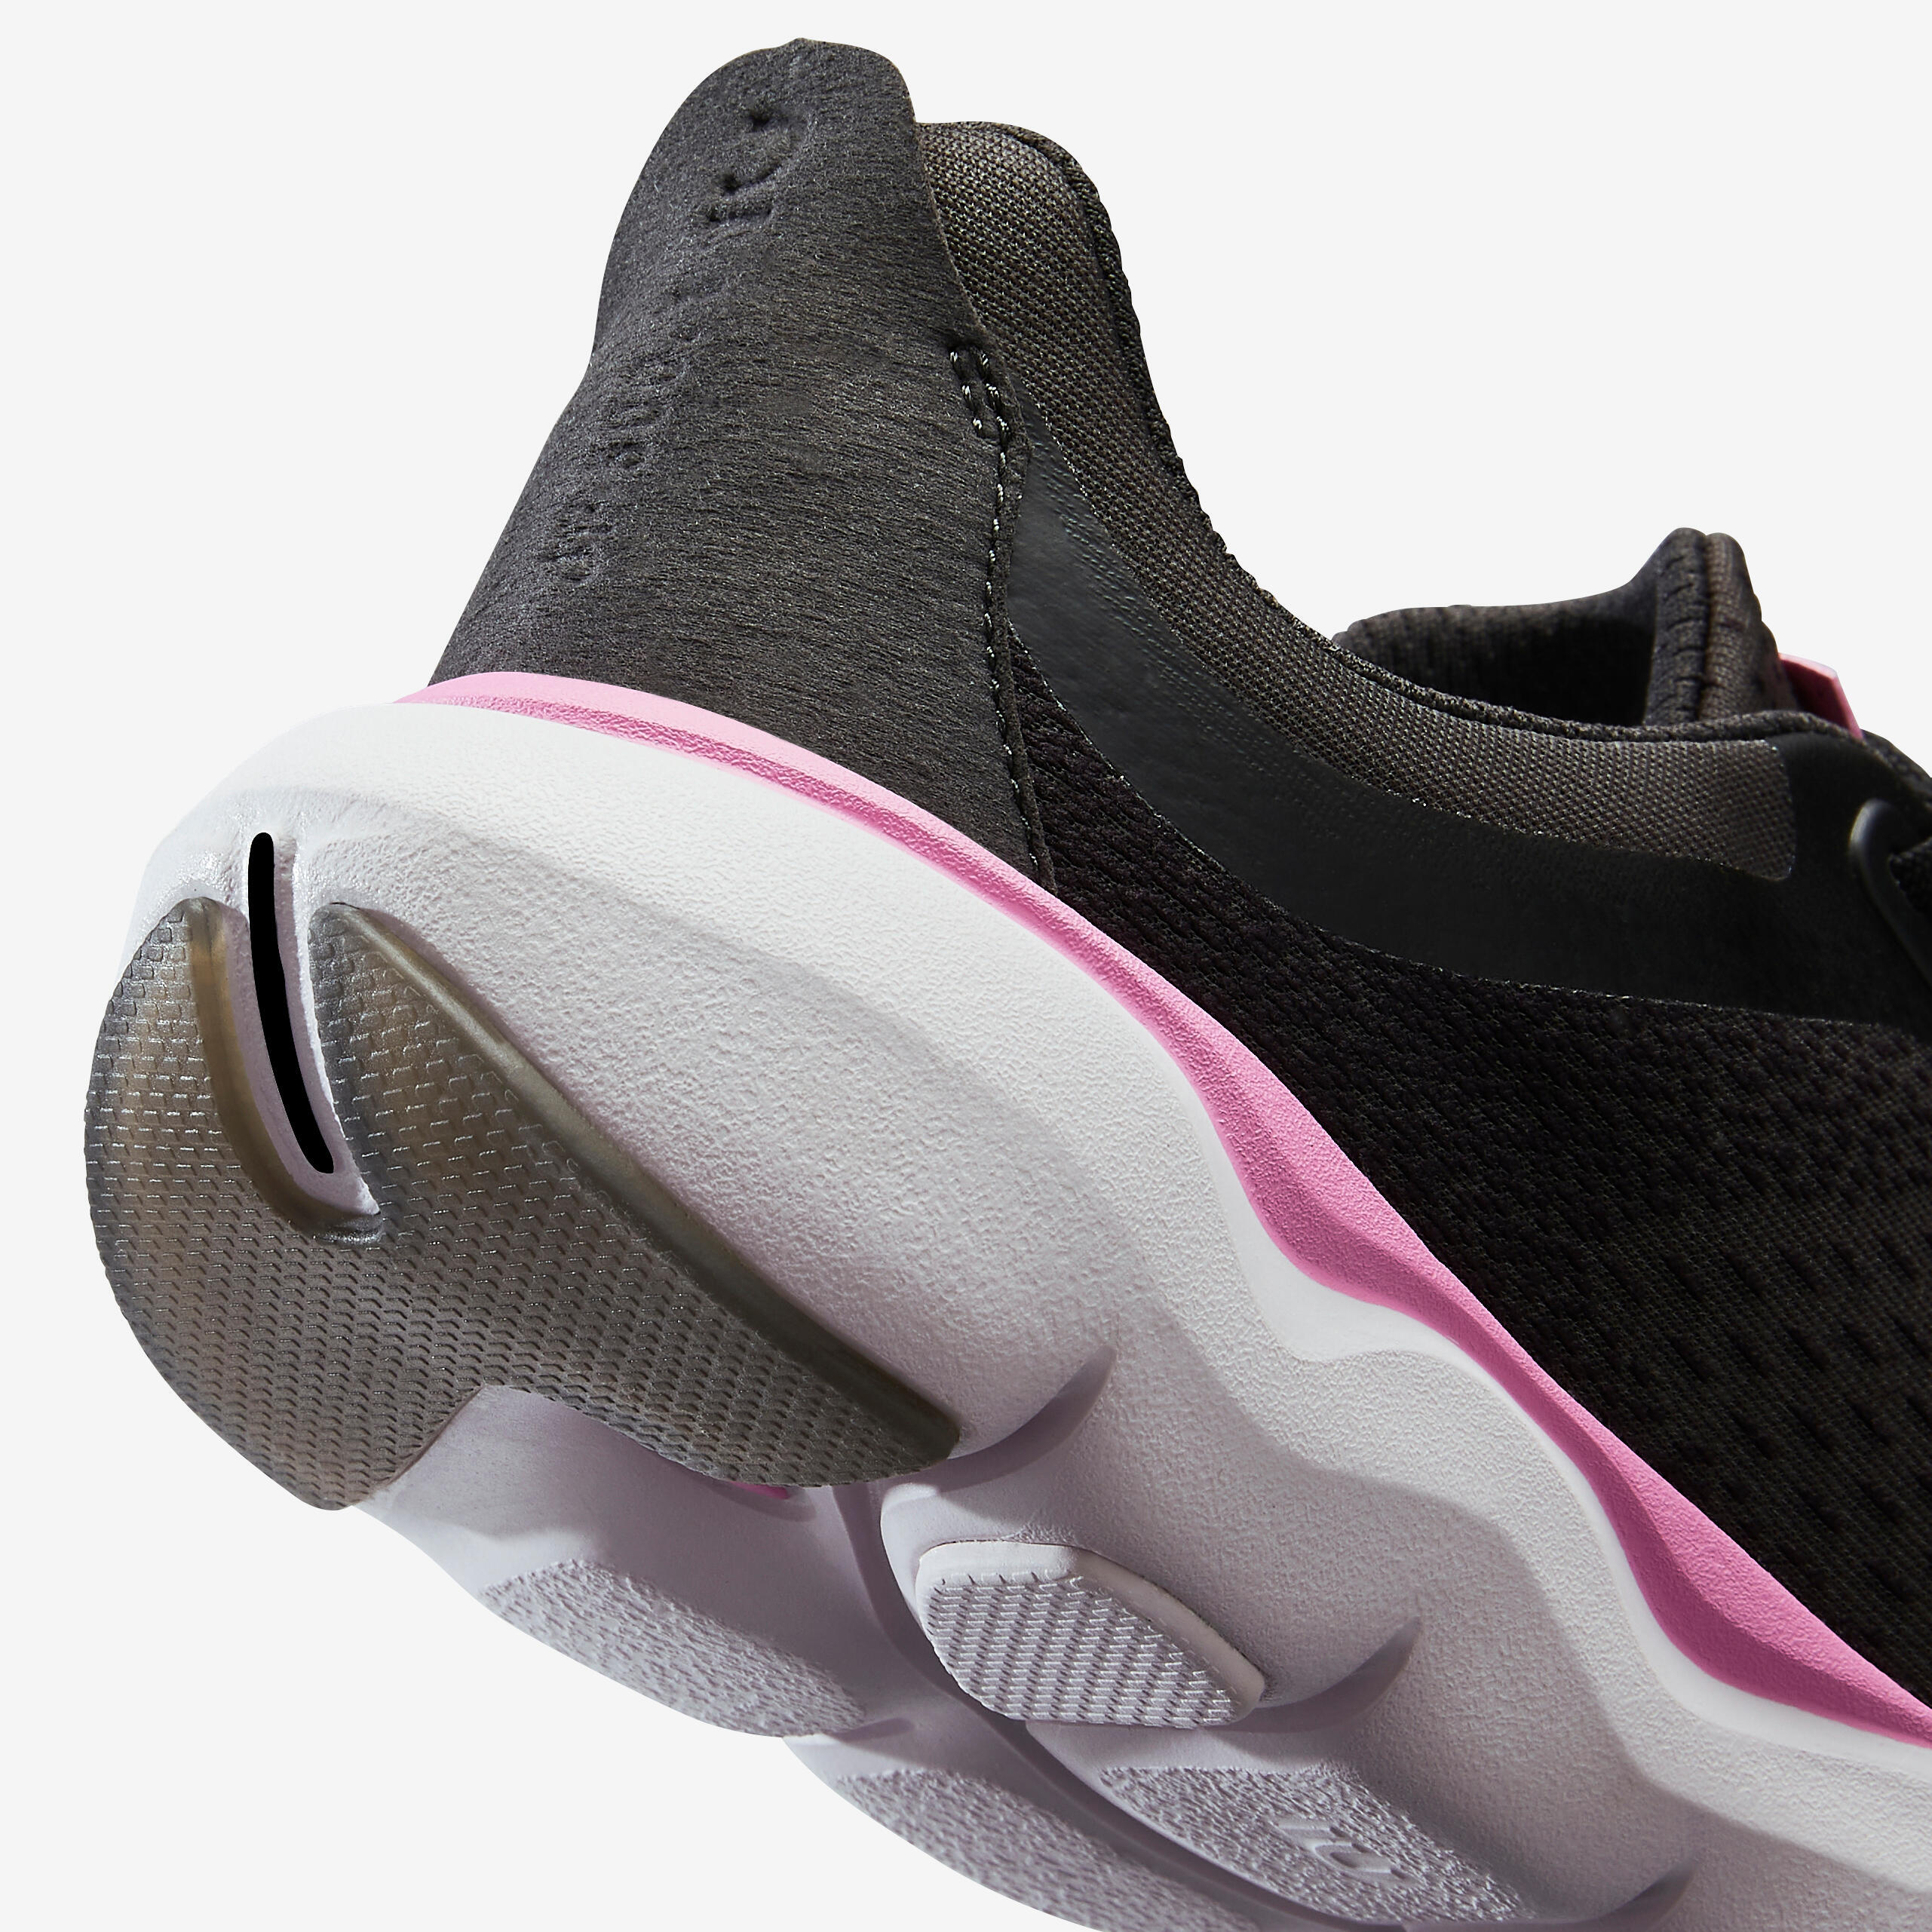 JOGFLOW 500.1 Women's Running Shoes - Dark Grey and Pink. 3/8